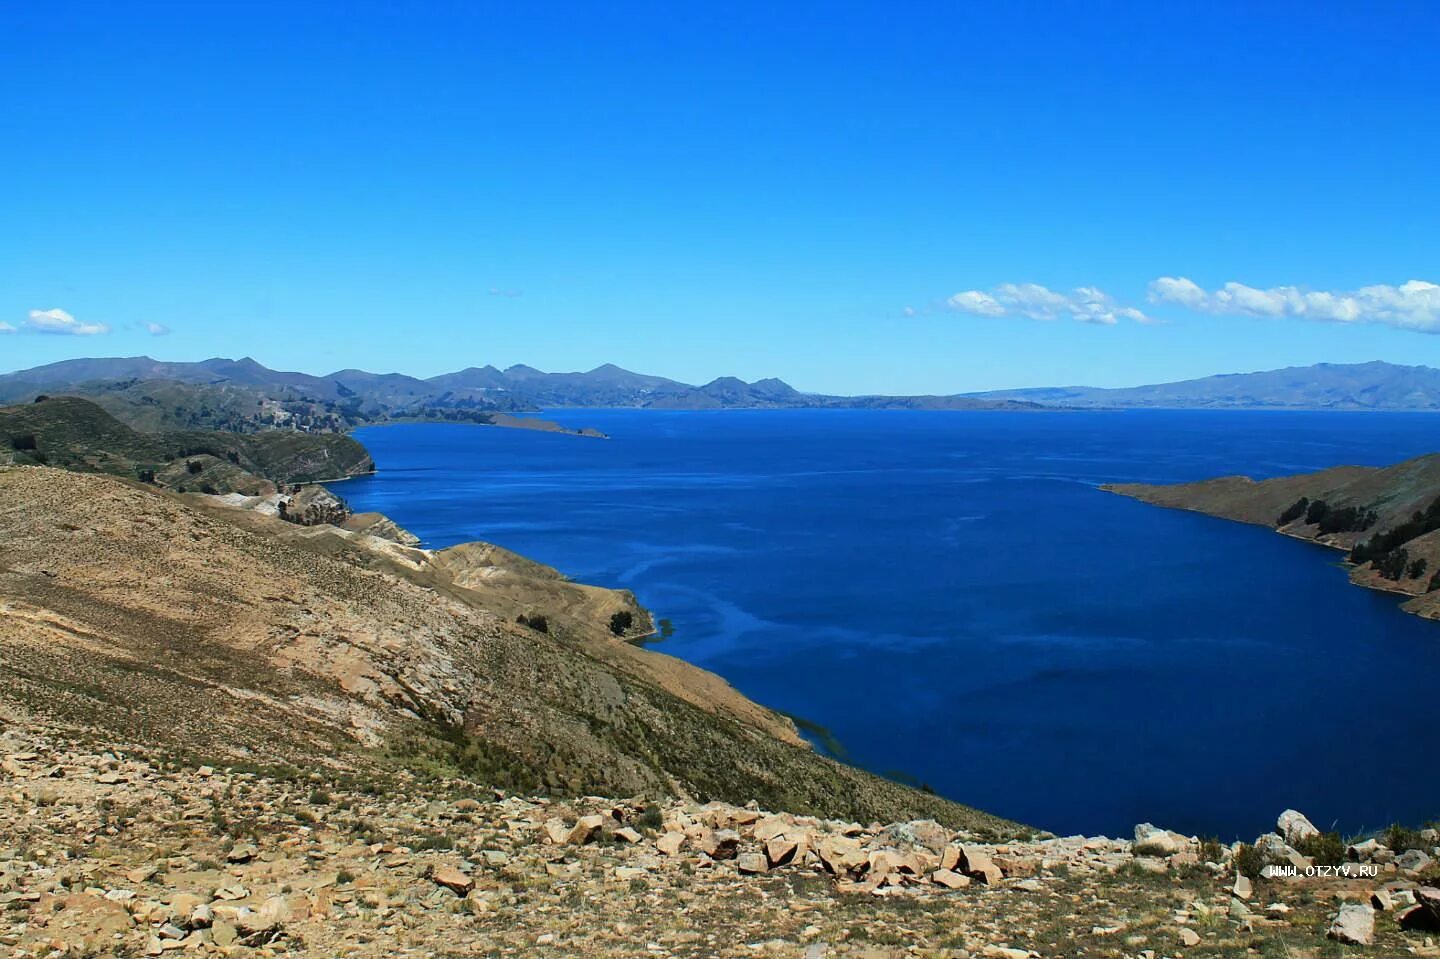 Озеро Титикака Перу. Боливия озеро Титикака. Южная Америка озеро Титикака. Высокогорное озеро Титикака. Высочайшее судоходное озеро